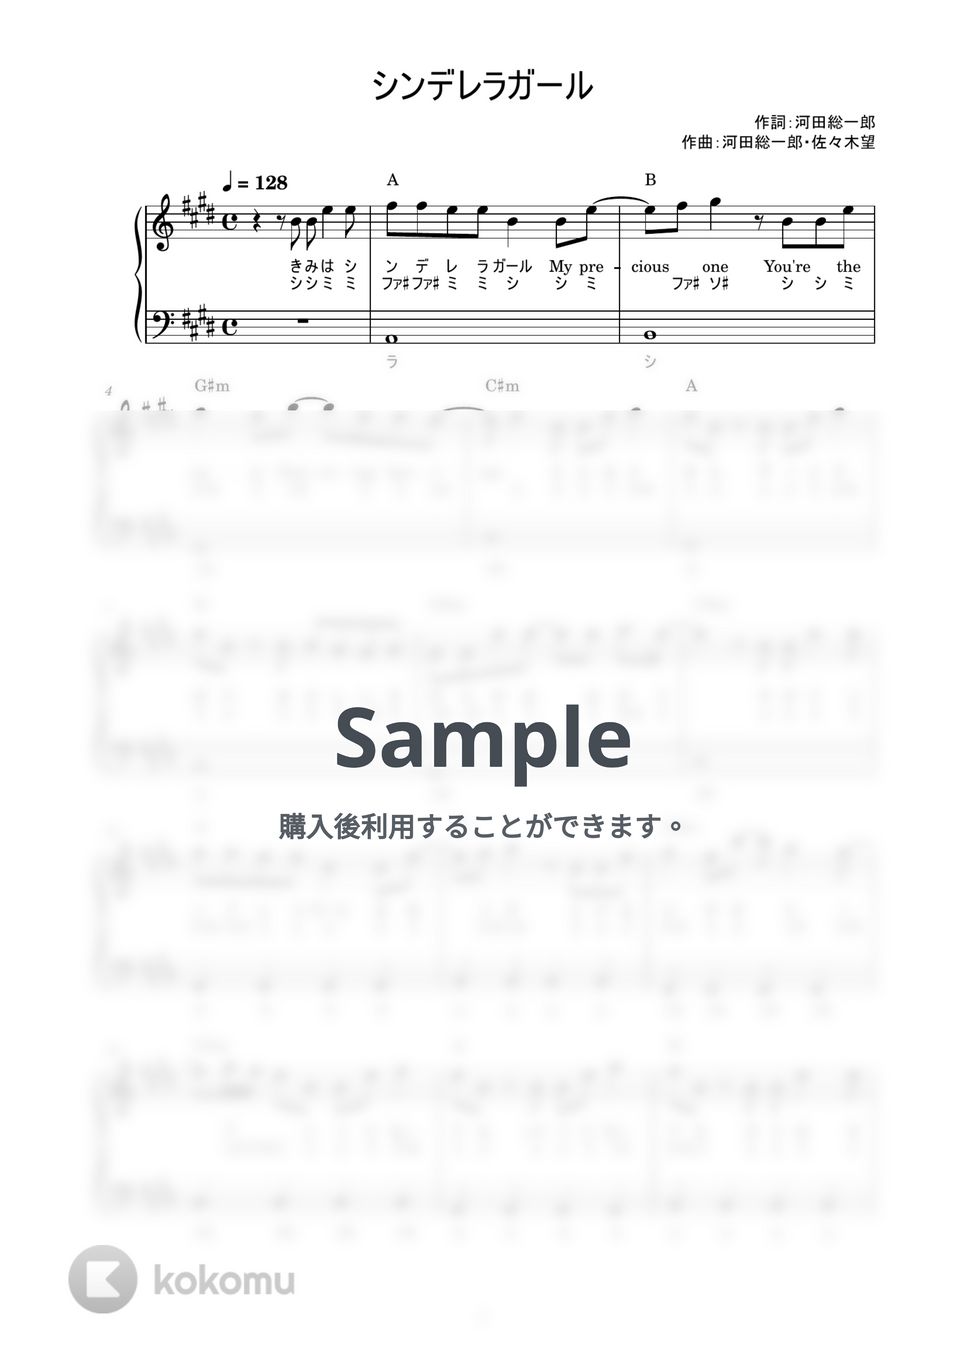 King&Prince - シンデレラガール (かんたん / 歌詞付き / ドレミ付き / 初心者) by piano.tokyo